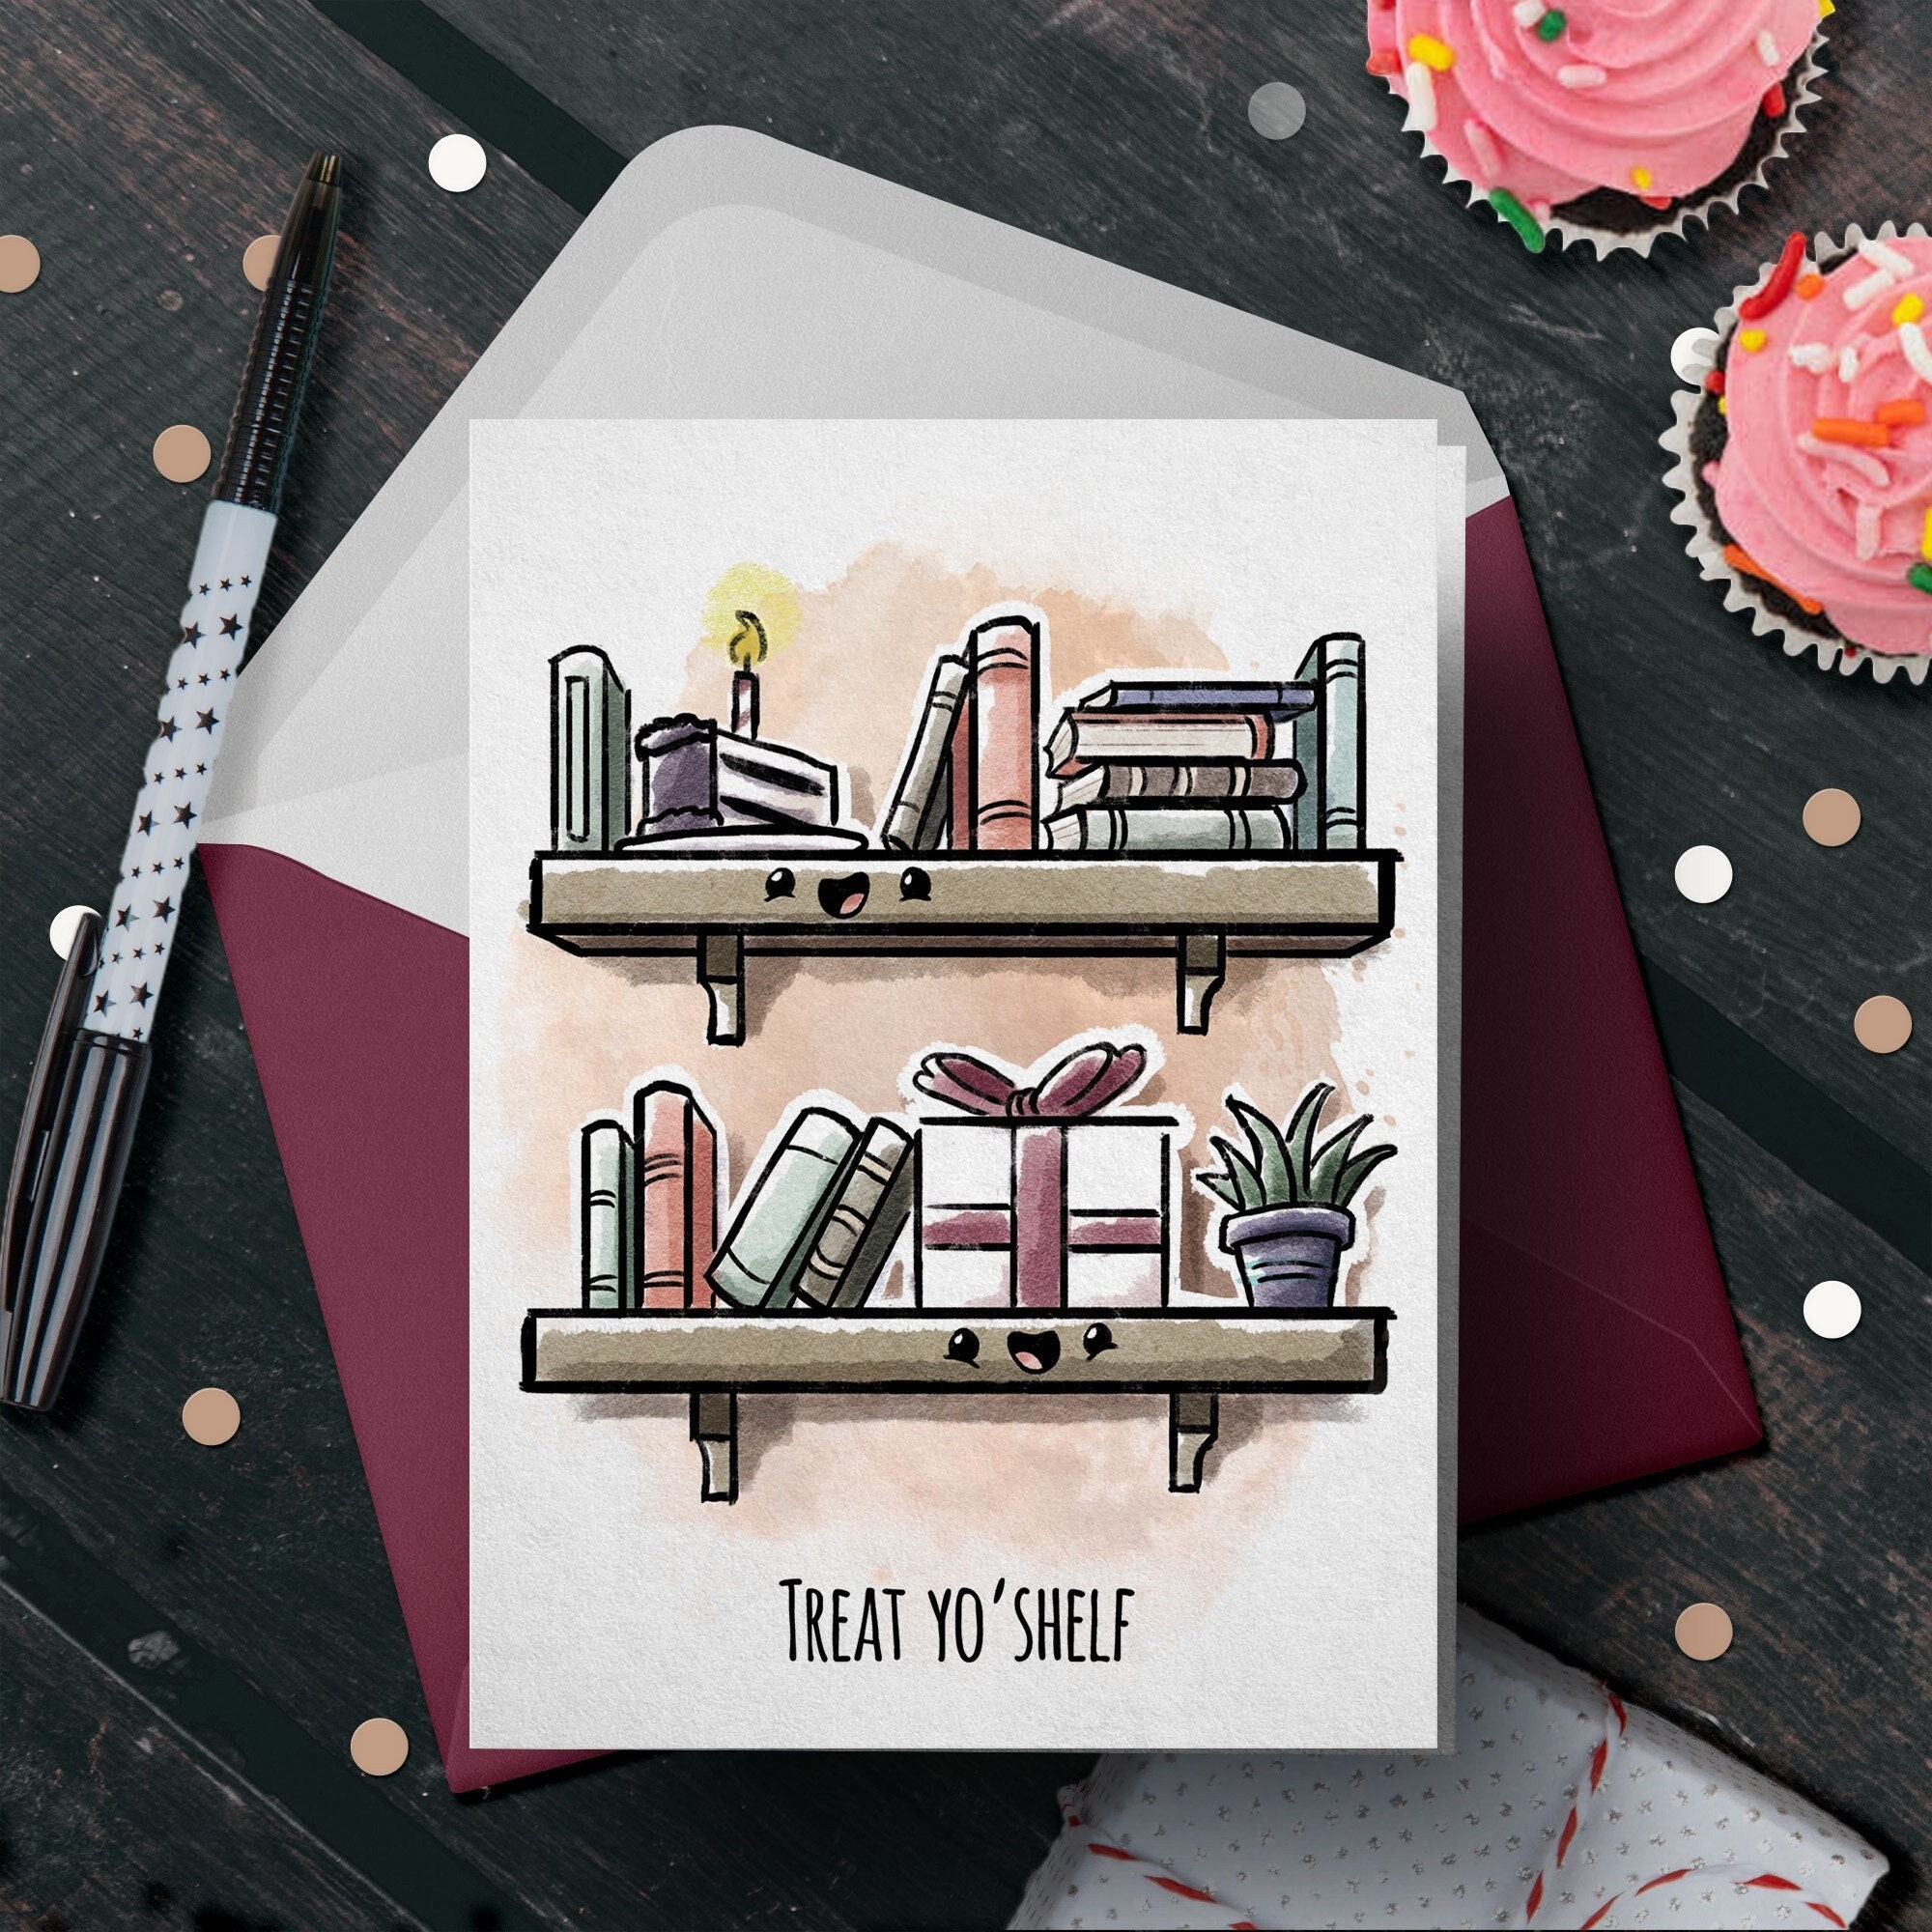 Book Birthday Card, Birthday Card for Book Worm, Book Lover Birthday Card,  Librarian Birthday Card, Author Birthday Card, Book Themed Card 